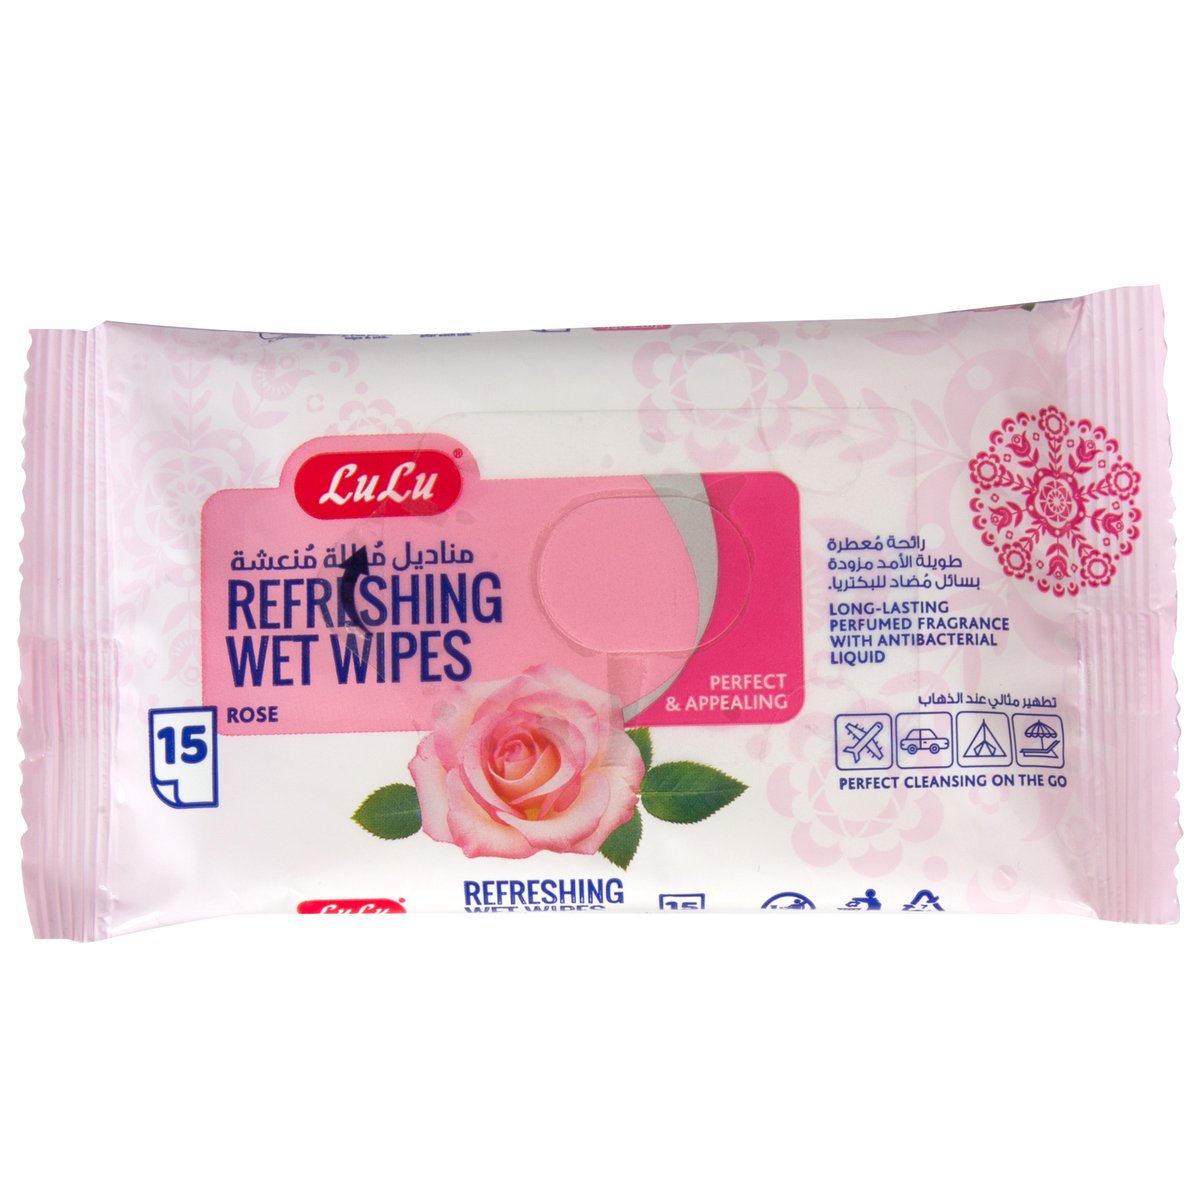 LuLu Refreshing Wet Wipes Rose 15 pcs